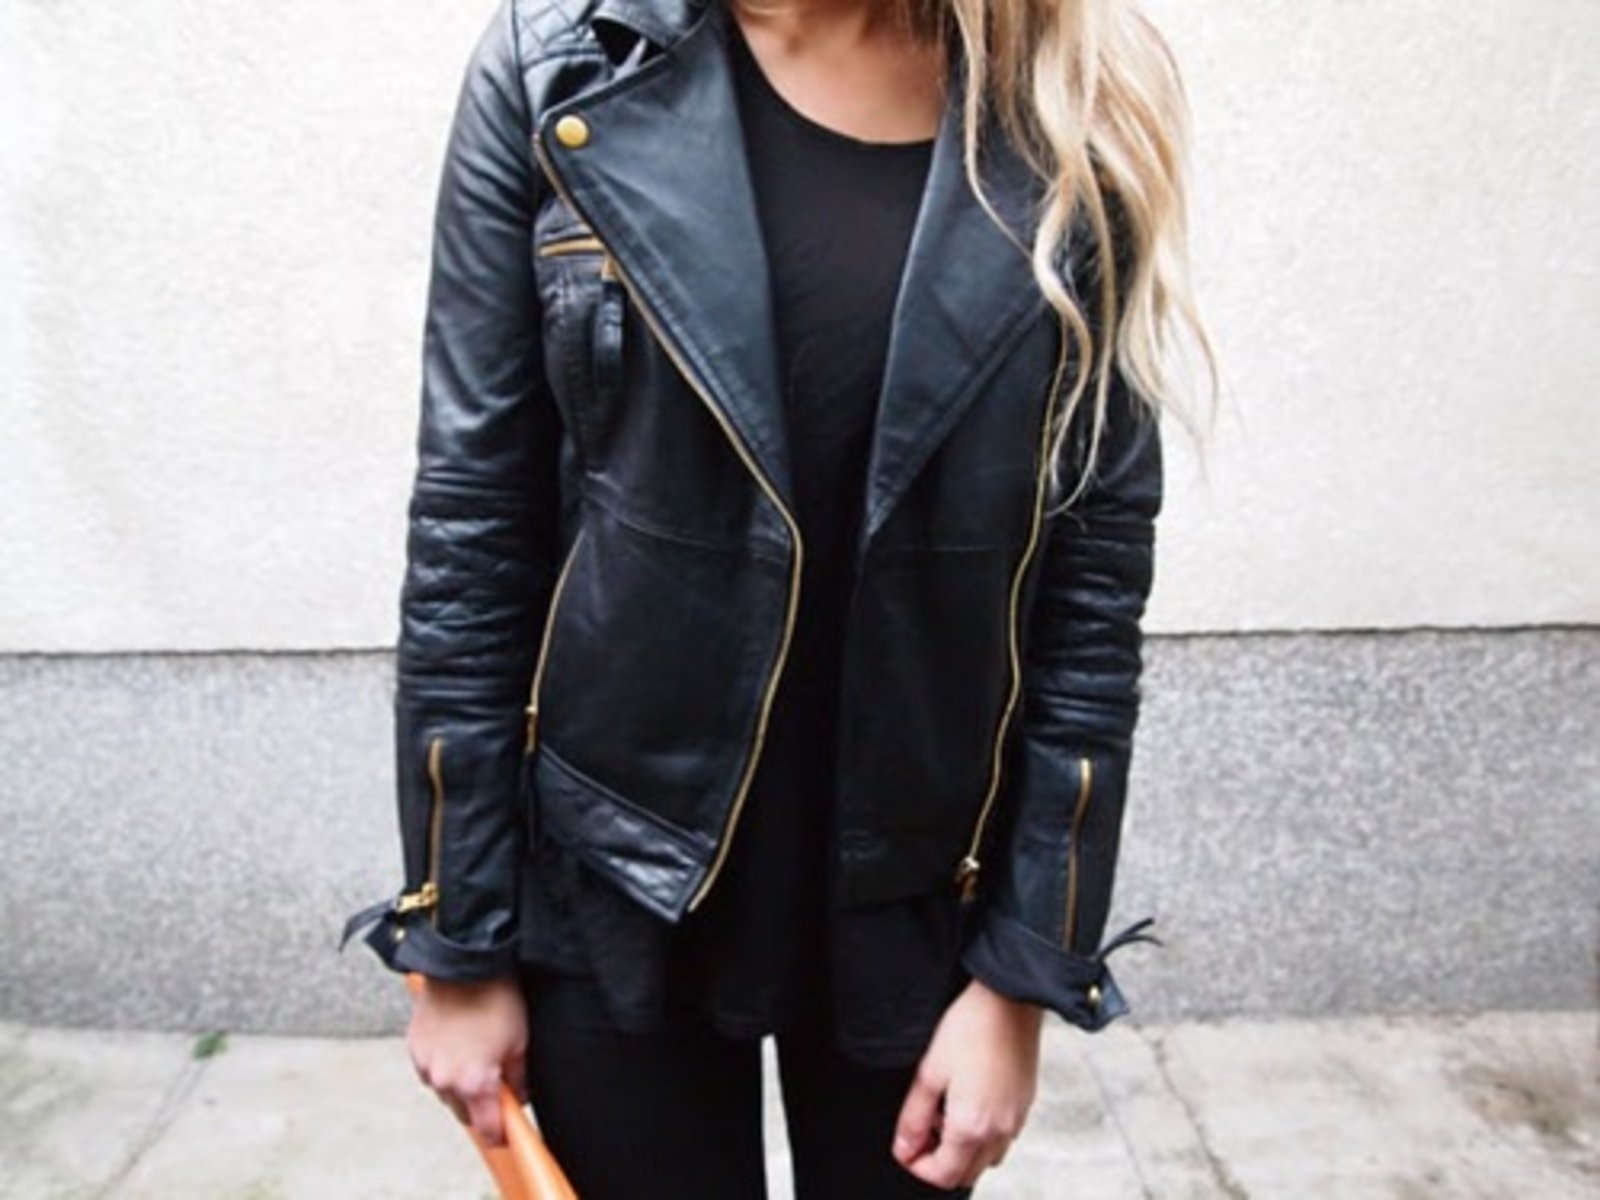 Teen Girls Leather Jackets